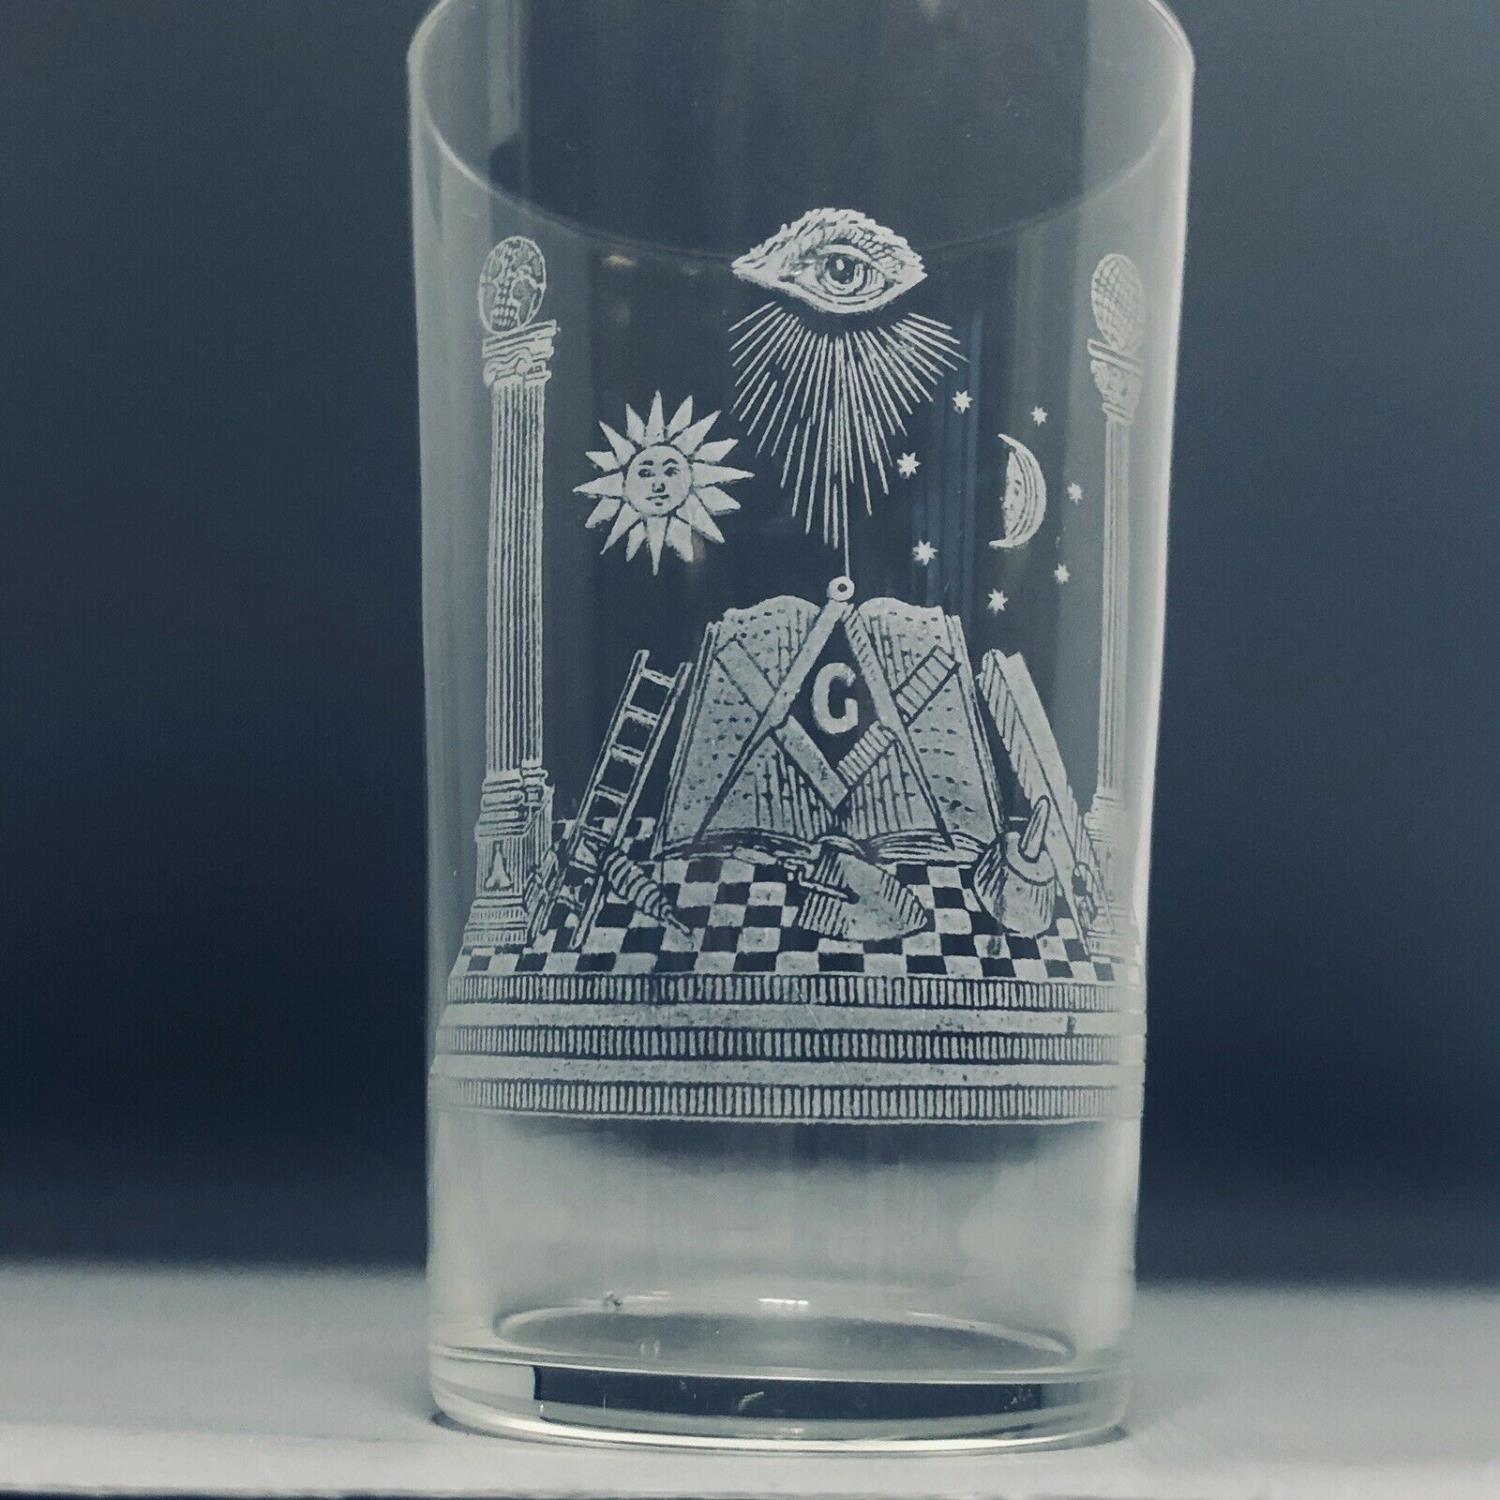 A set of 6 Masons Emblem Engraved Glass Tumblers Glasses - Masonic Interest - Image 2 of 3